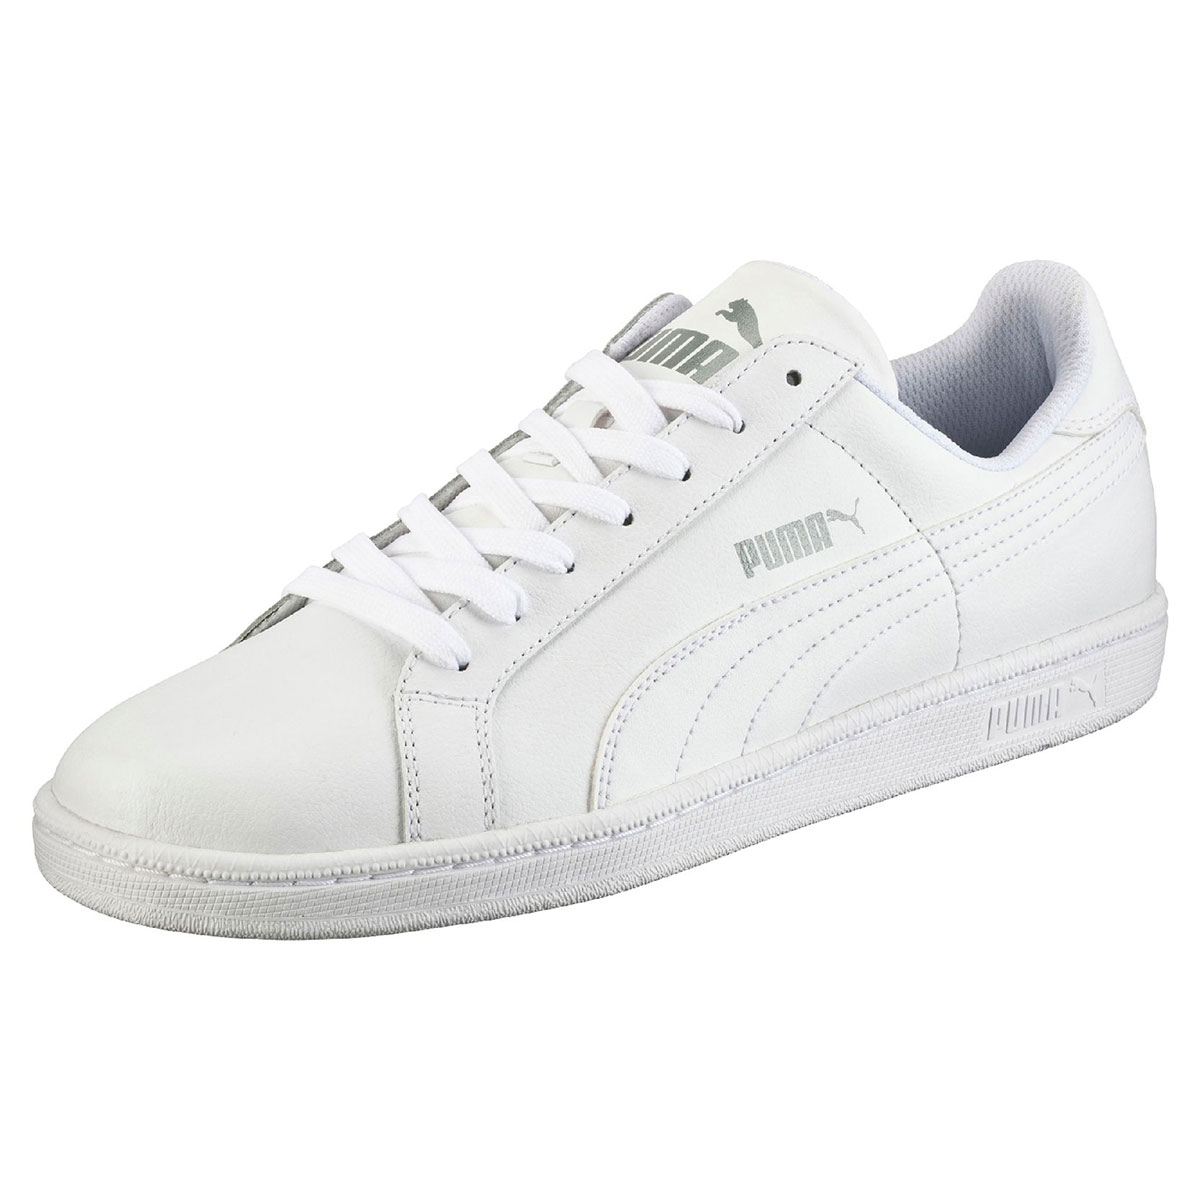 Puma Smash Leather white  356722-02